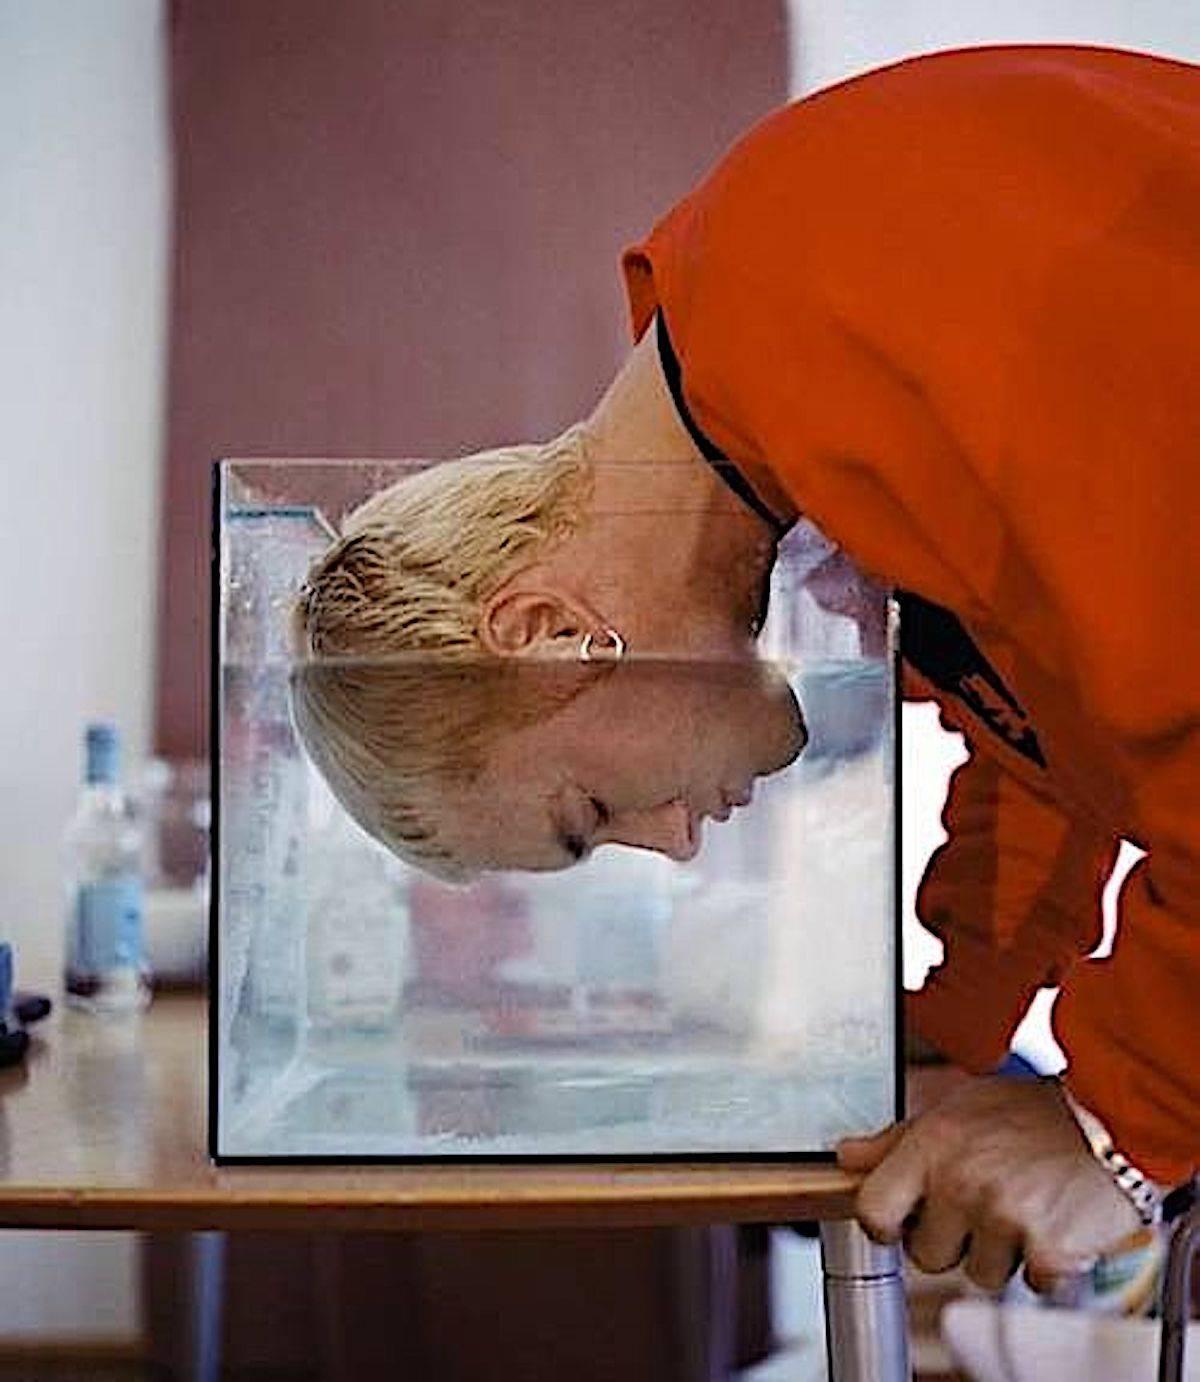 Chris Buck Figurative Photograph - Eminem 1999 (unframed) photo figurative contemporary red portrait